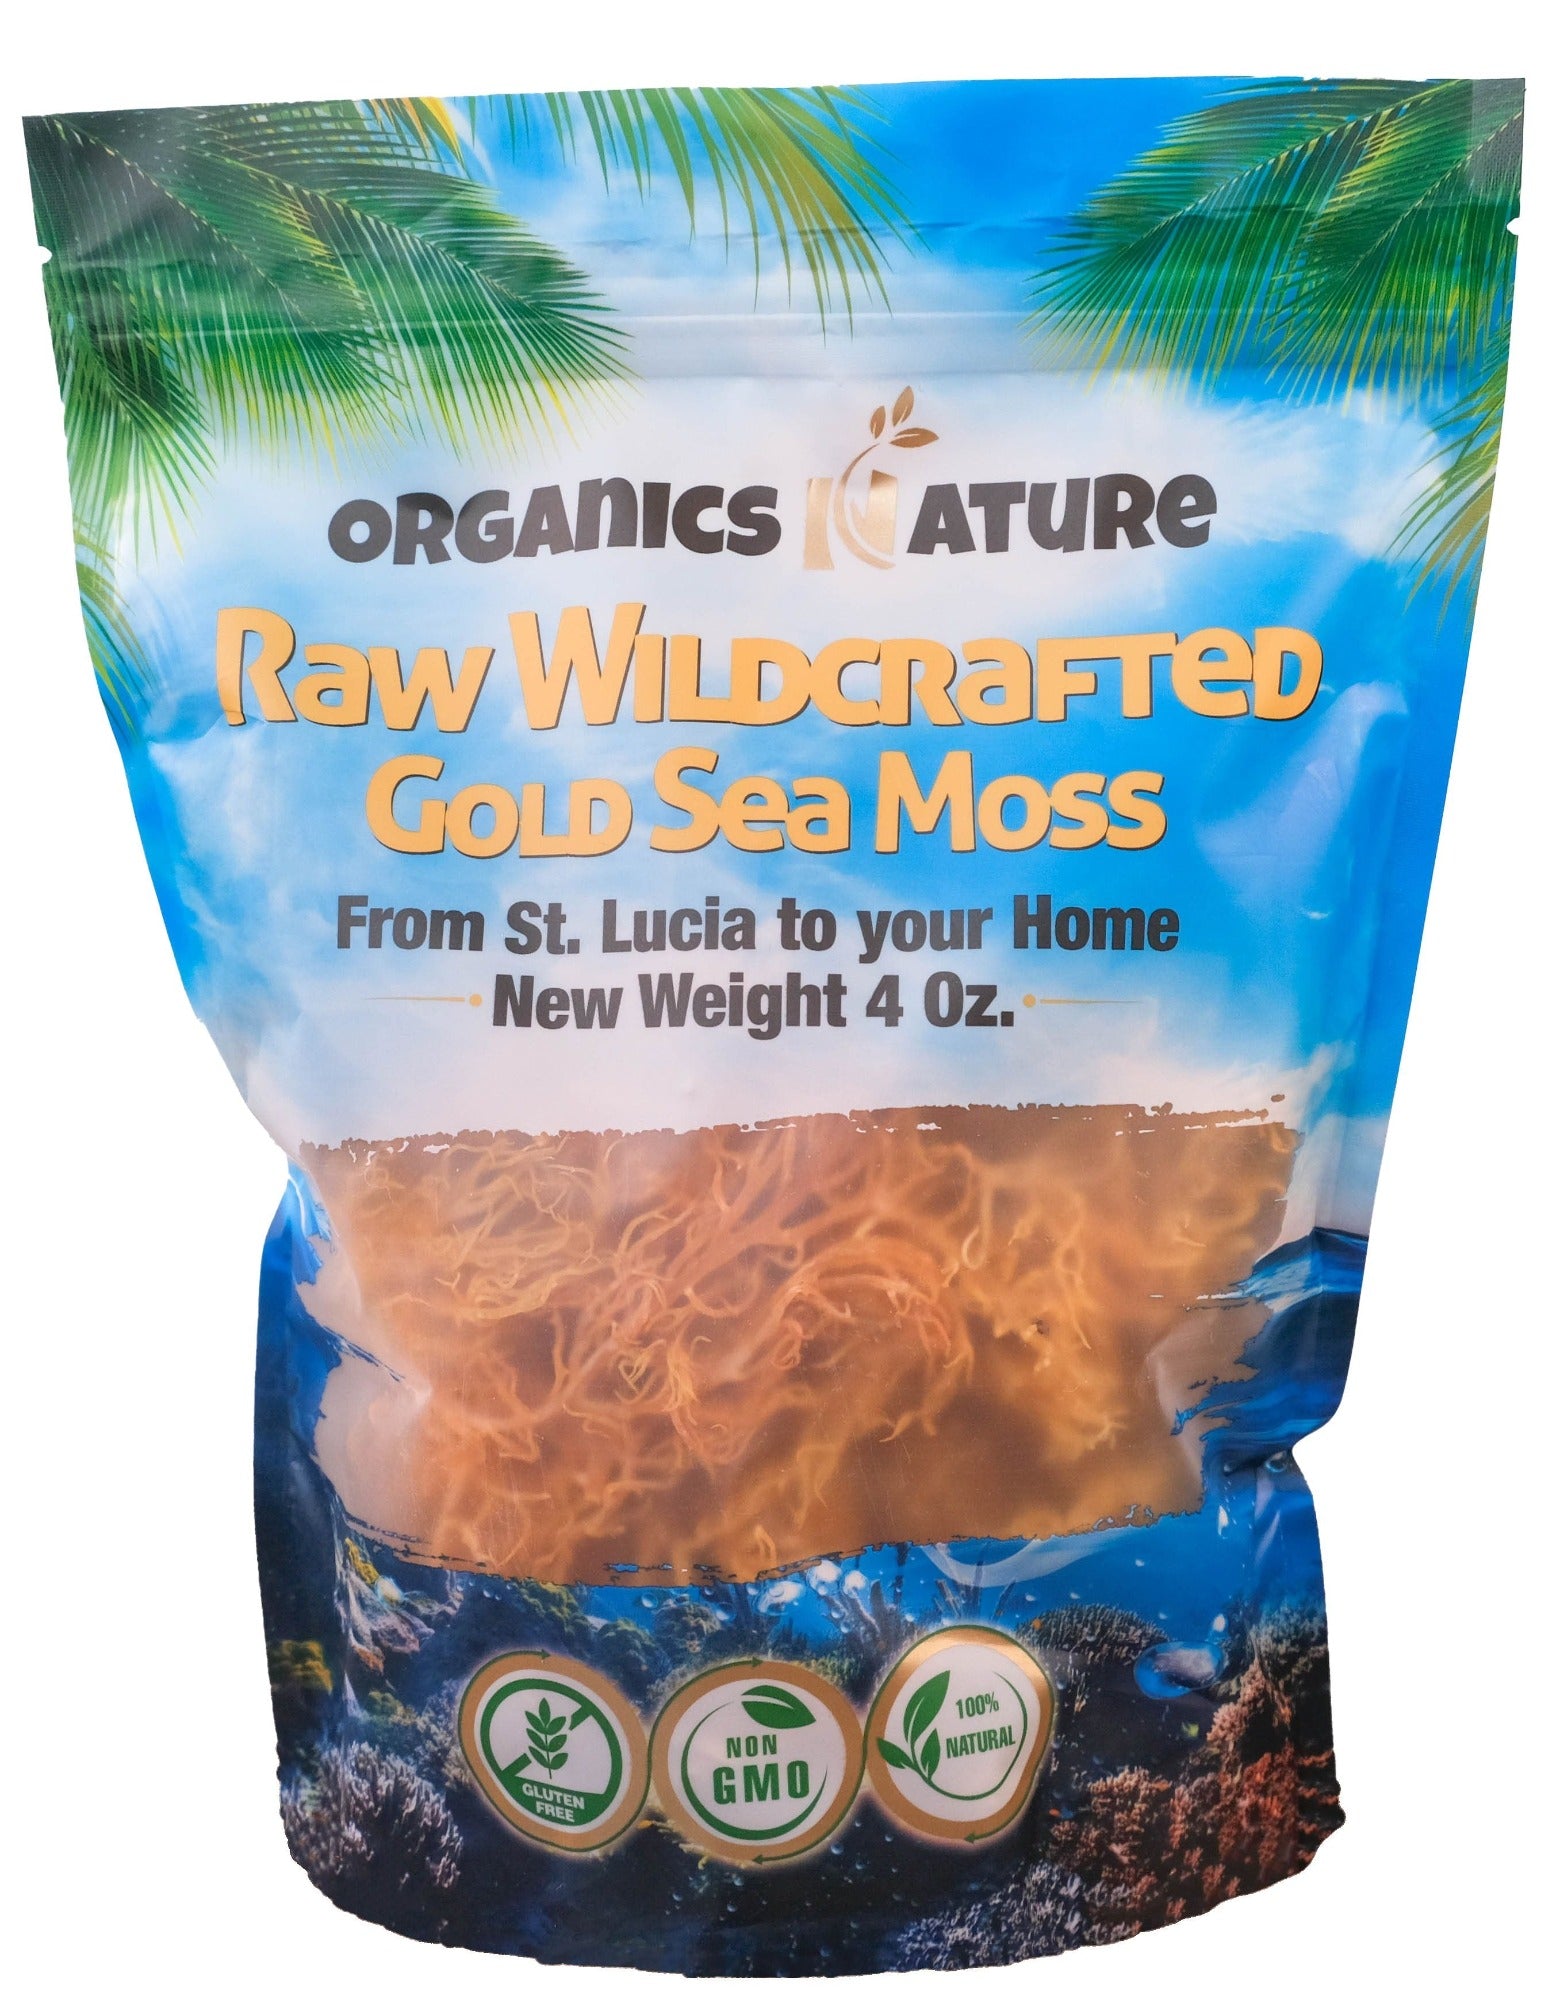 100% Organic Wildcrafted Sea Moss Gel (380g) - Island Moss